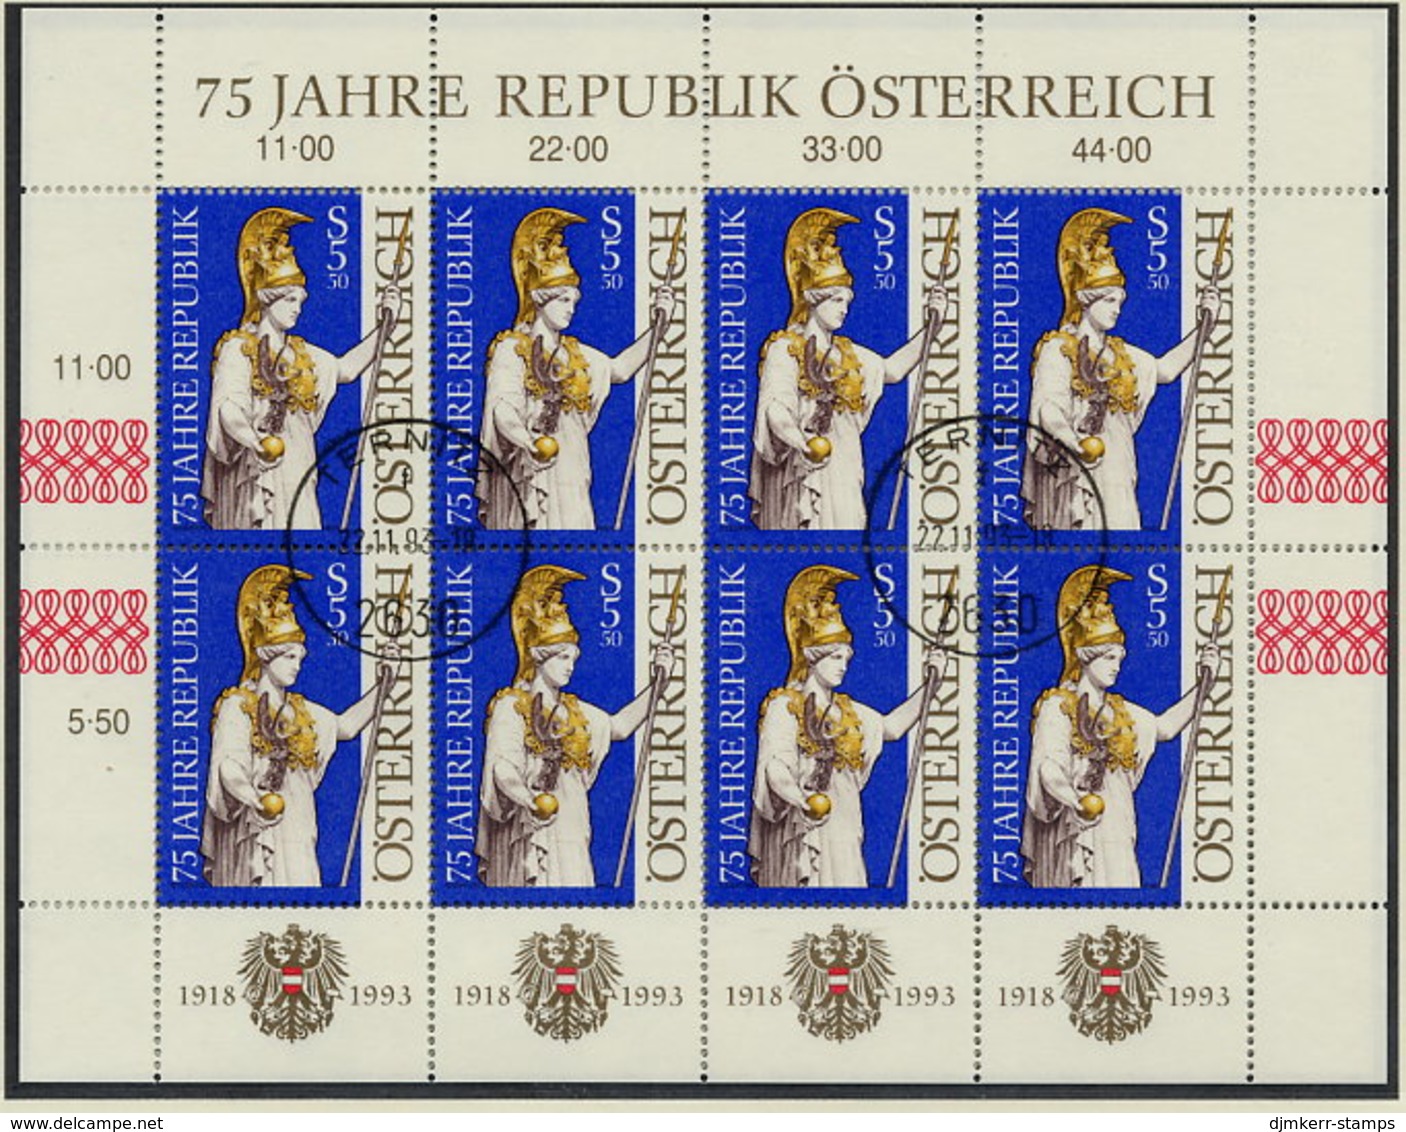 AUSTRIA 1993 Anniversary Of Republic Sheetlet, Cancelled.  Michel 2113 Kb - Blocks & Kleinbögen